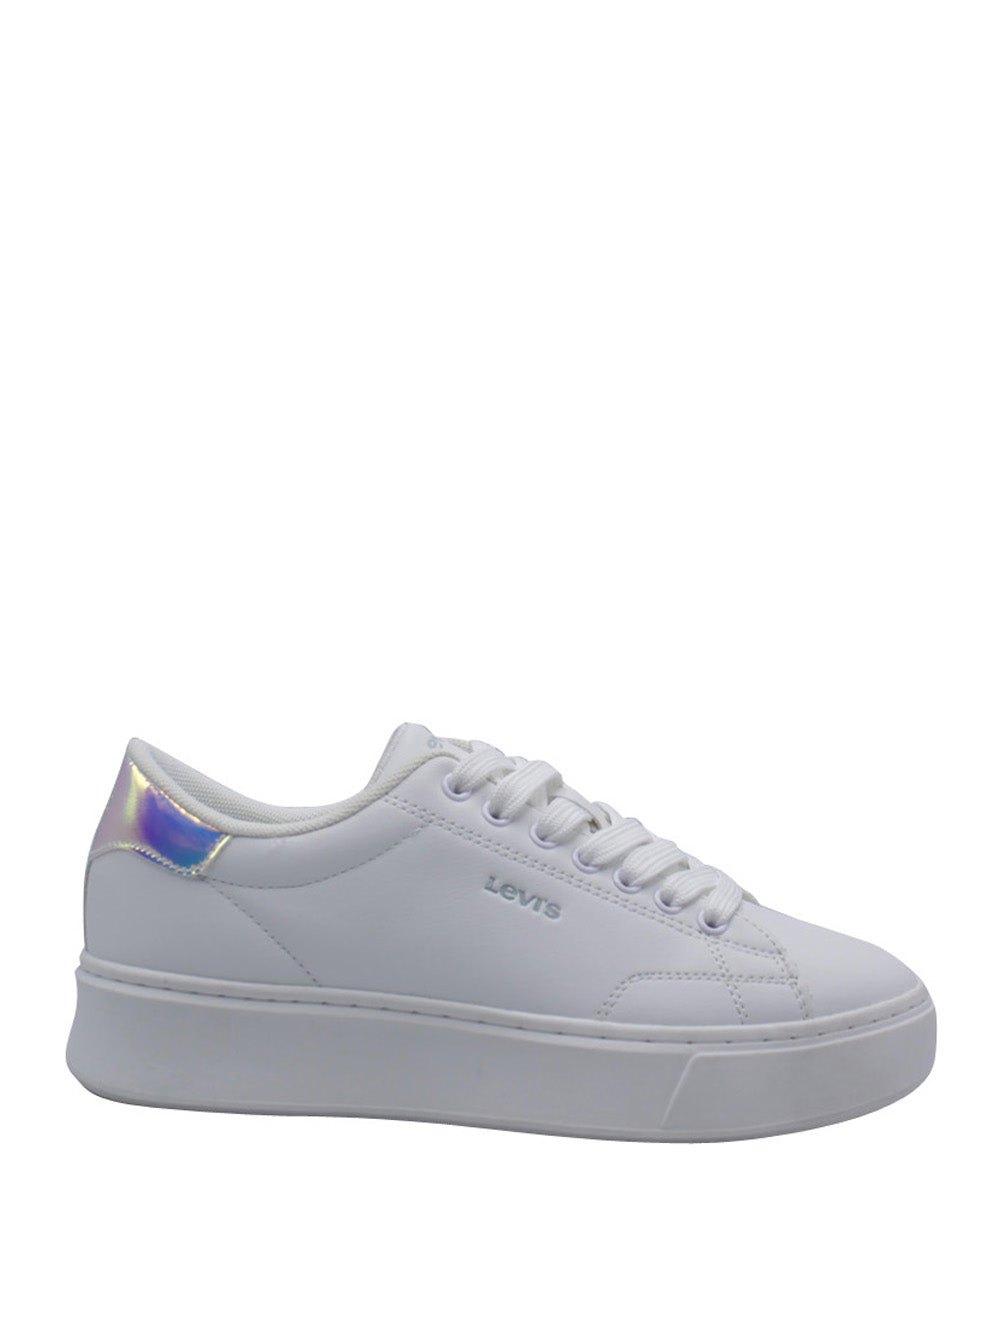 LEVI'S Sneakers Donna - Bianco modello VAMB0011S_J282A